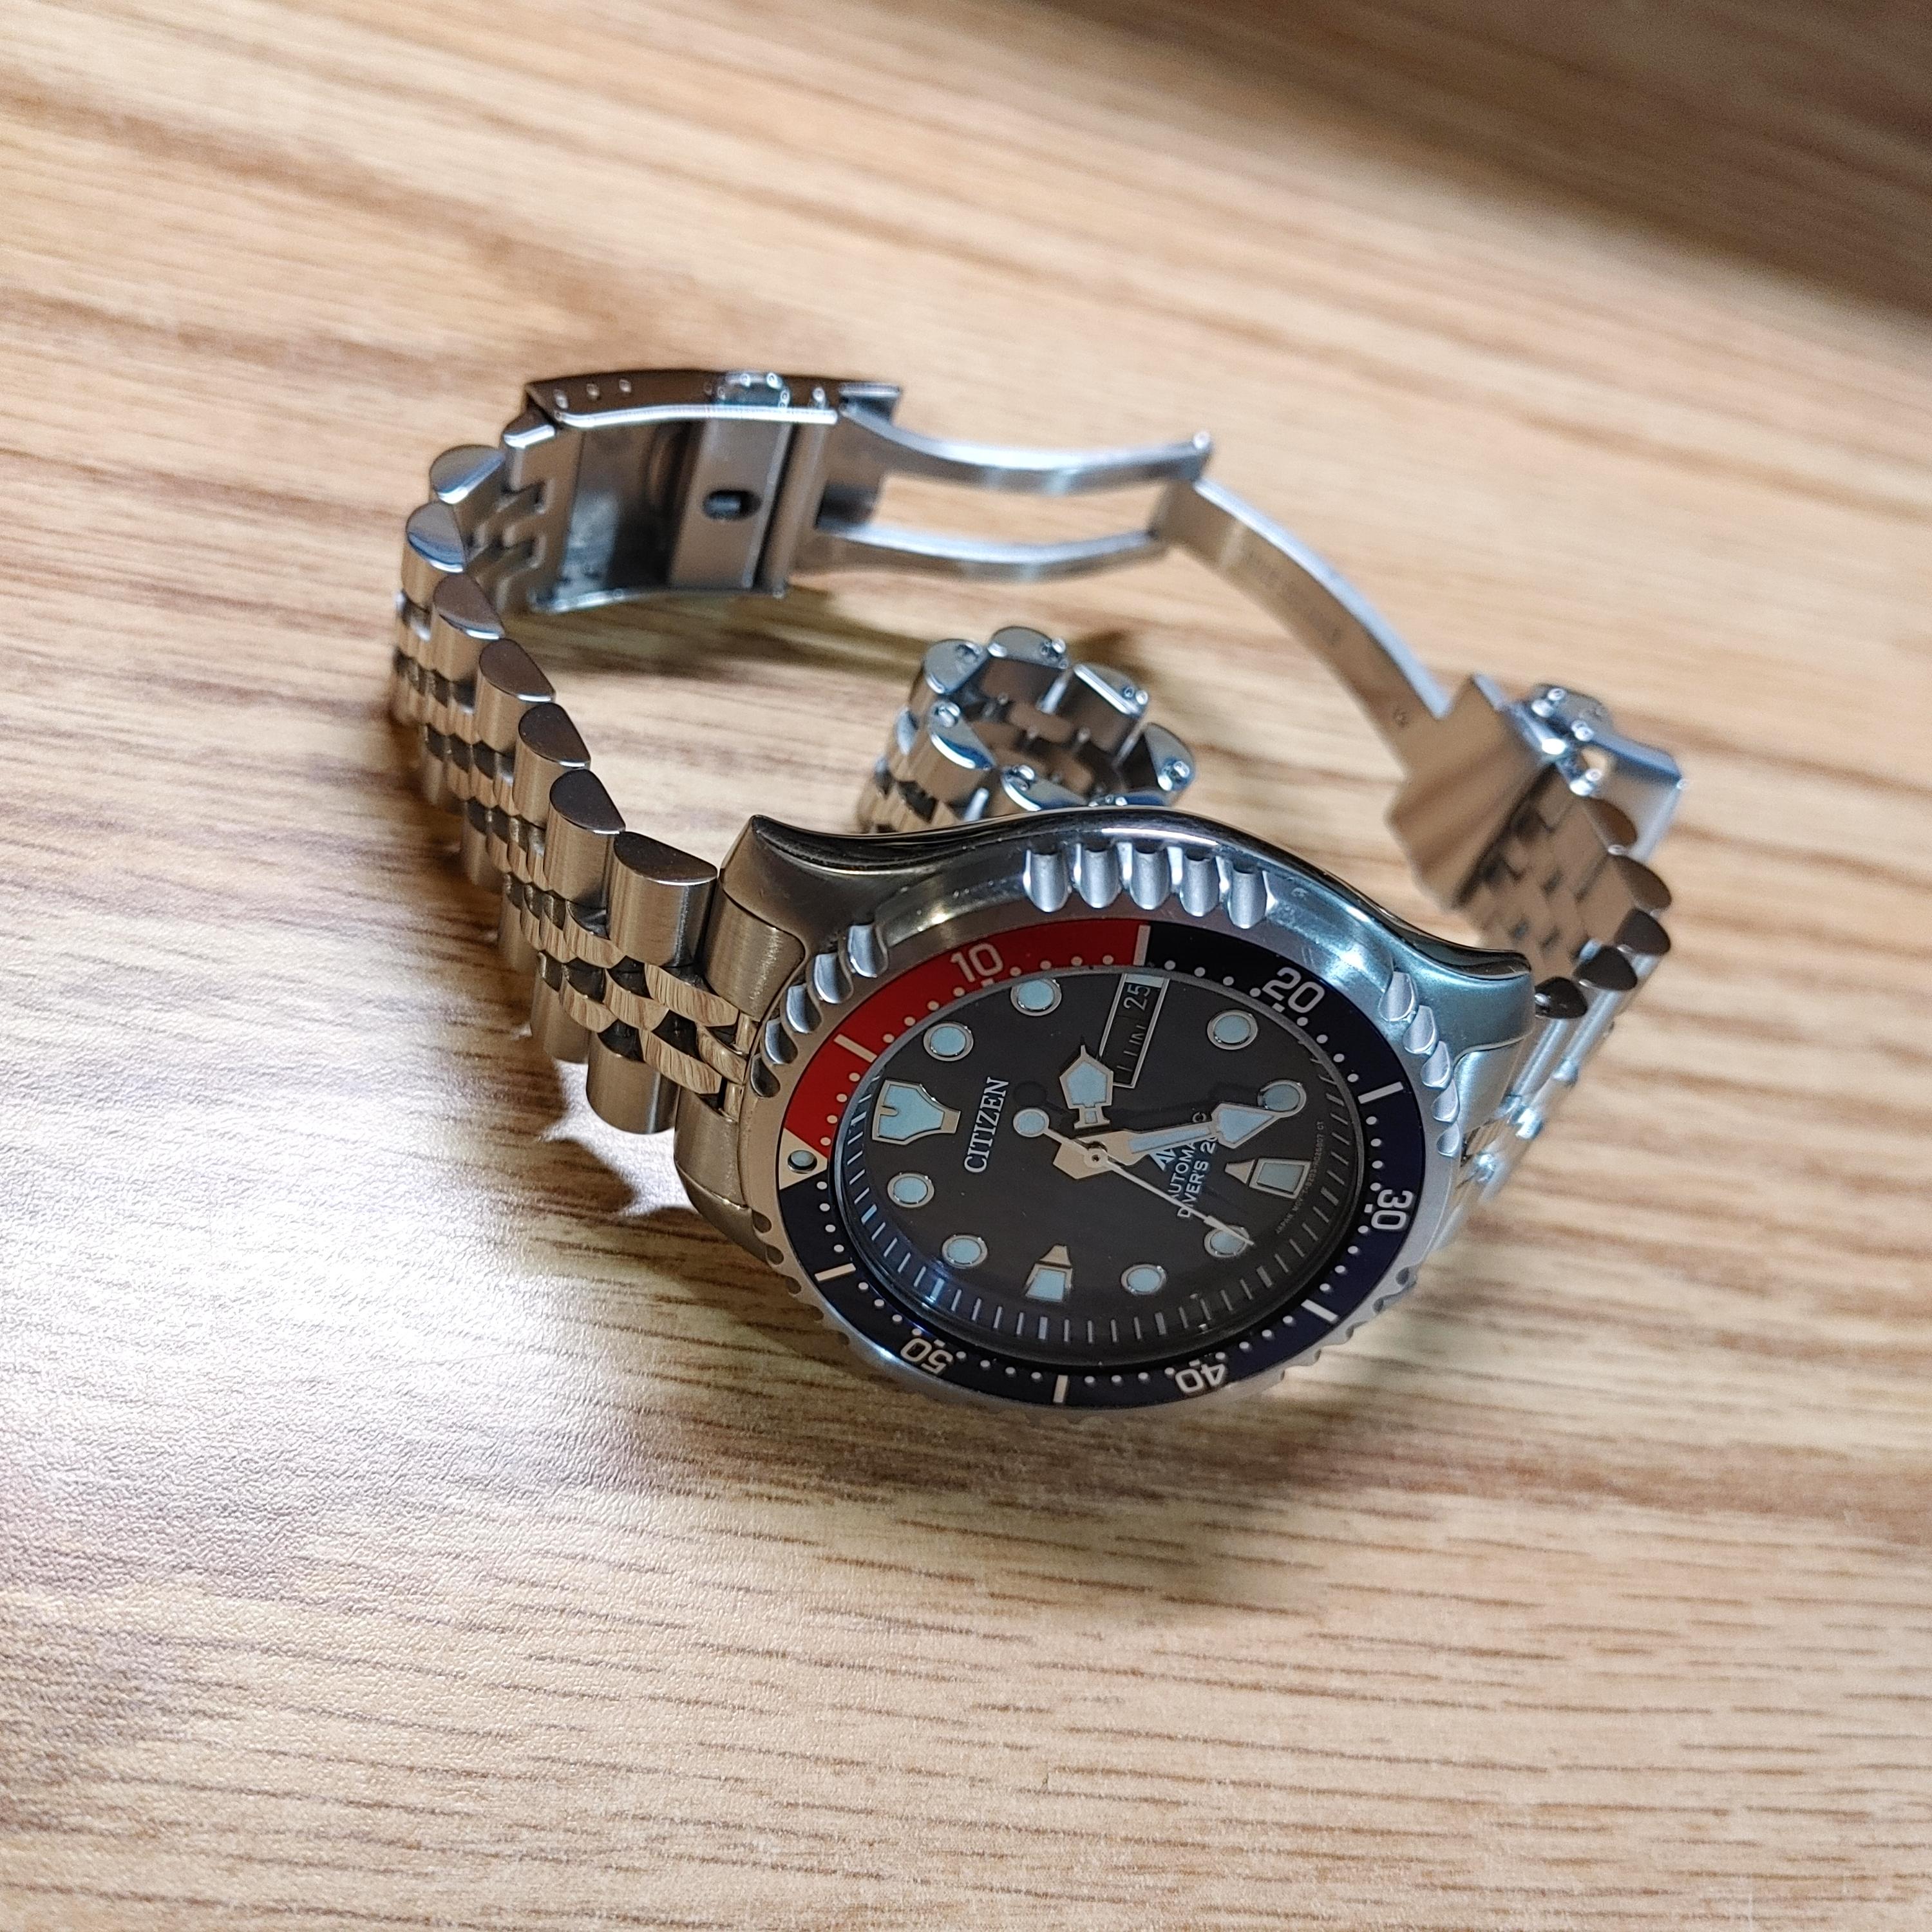 Islander 20mm Brushed Solid-Link Watch Bracelet for Citizen ProMaster Quartz Dive Watch #BRAC-35